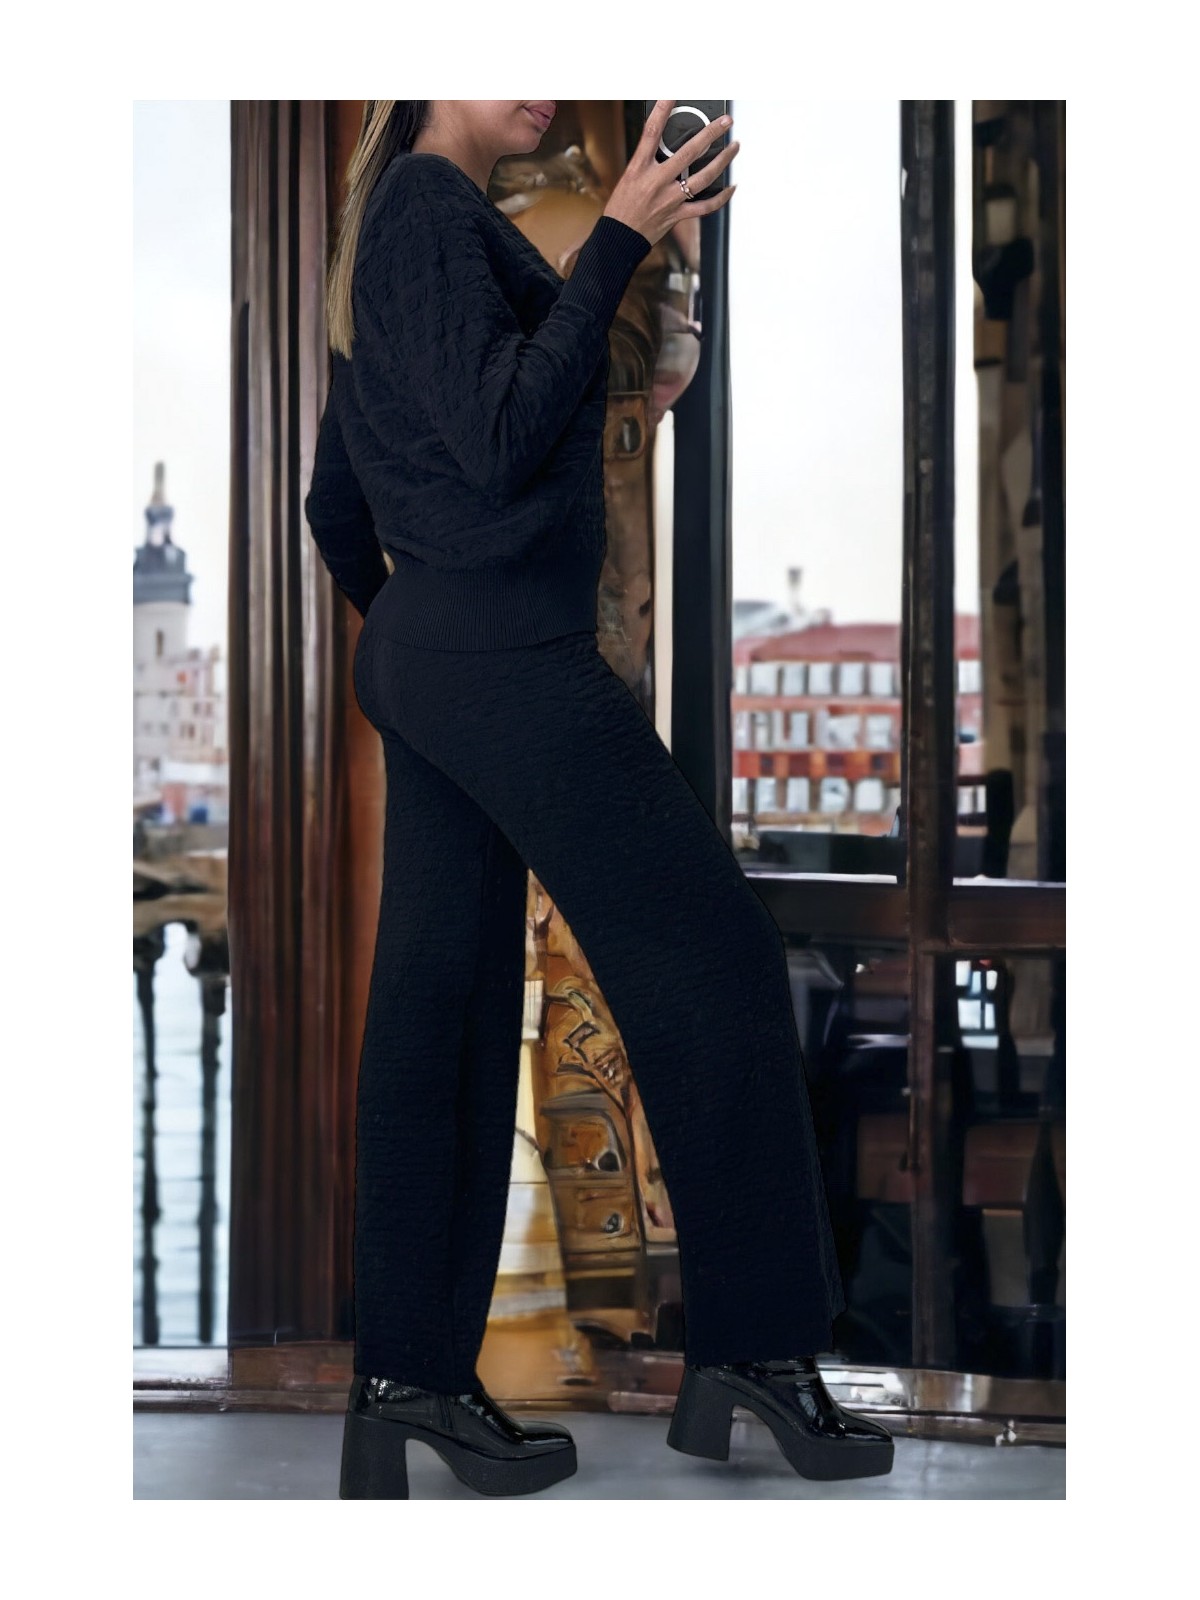 Ensemble noir gilet et pantalon palazzo en jaquard très extensible - 3